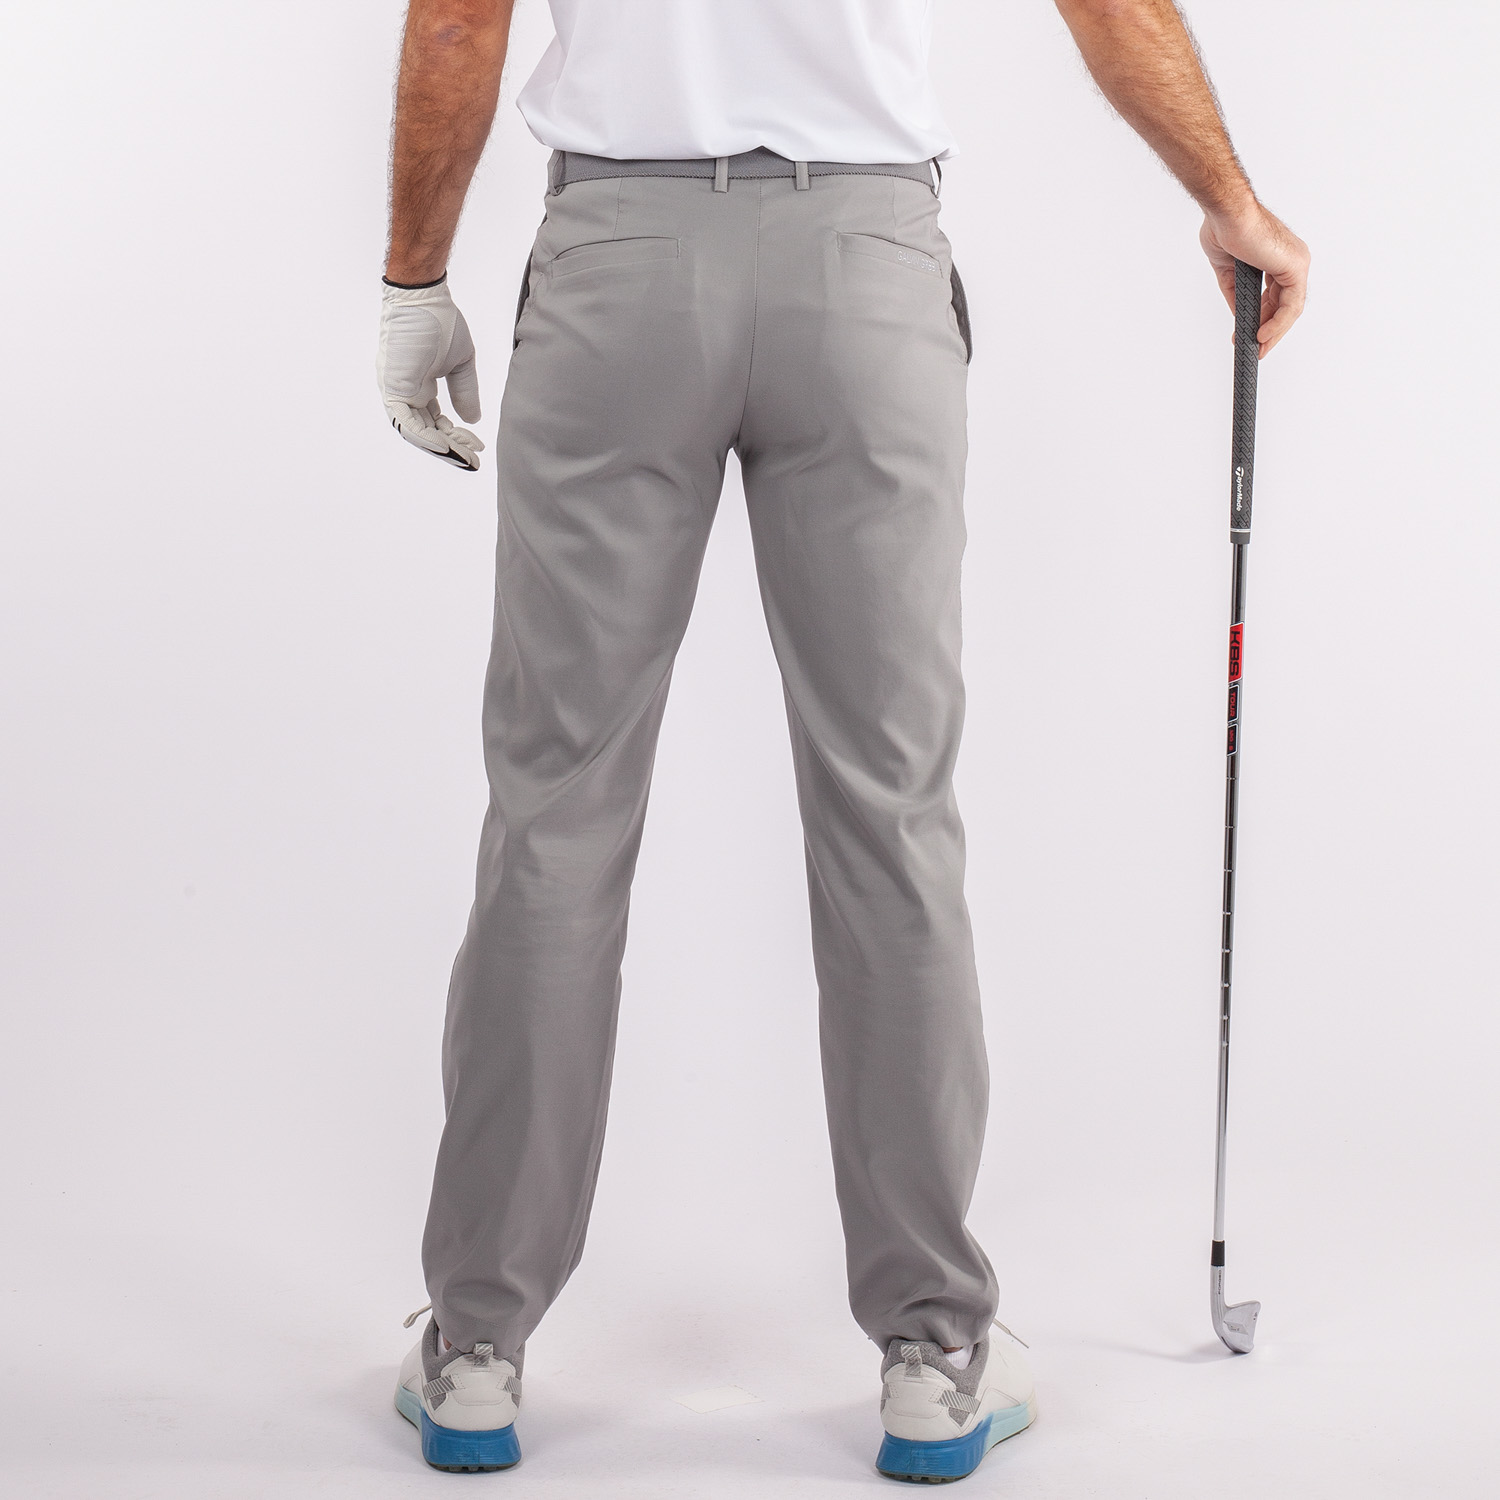 Galvin Green Noah Ventil8 Plus Trousers White | Scottsdale Golf